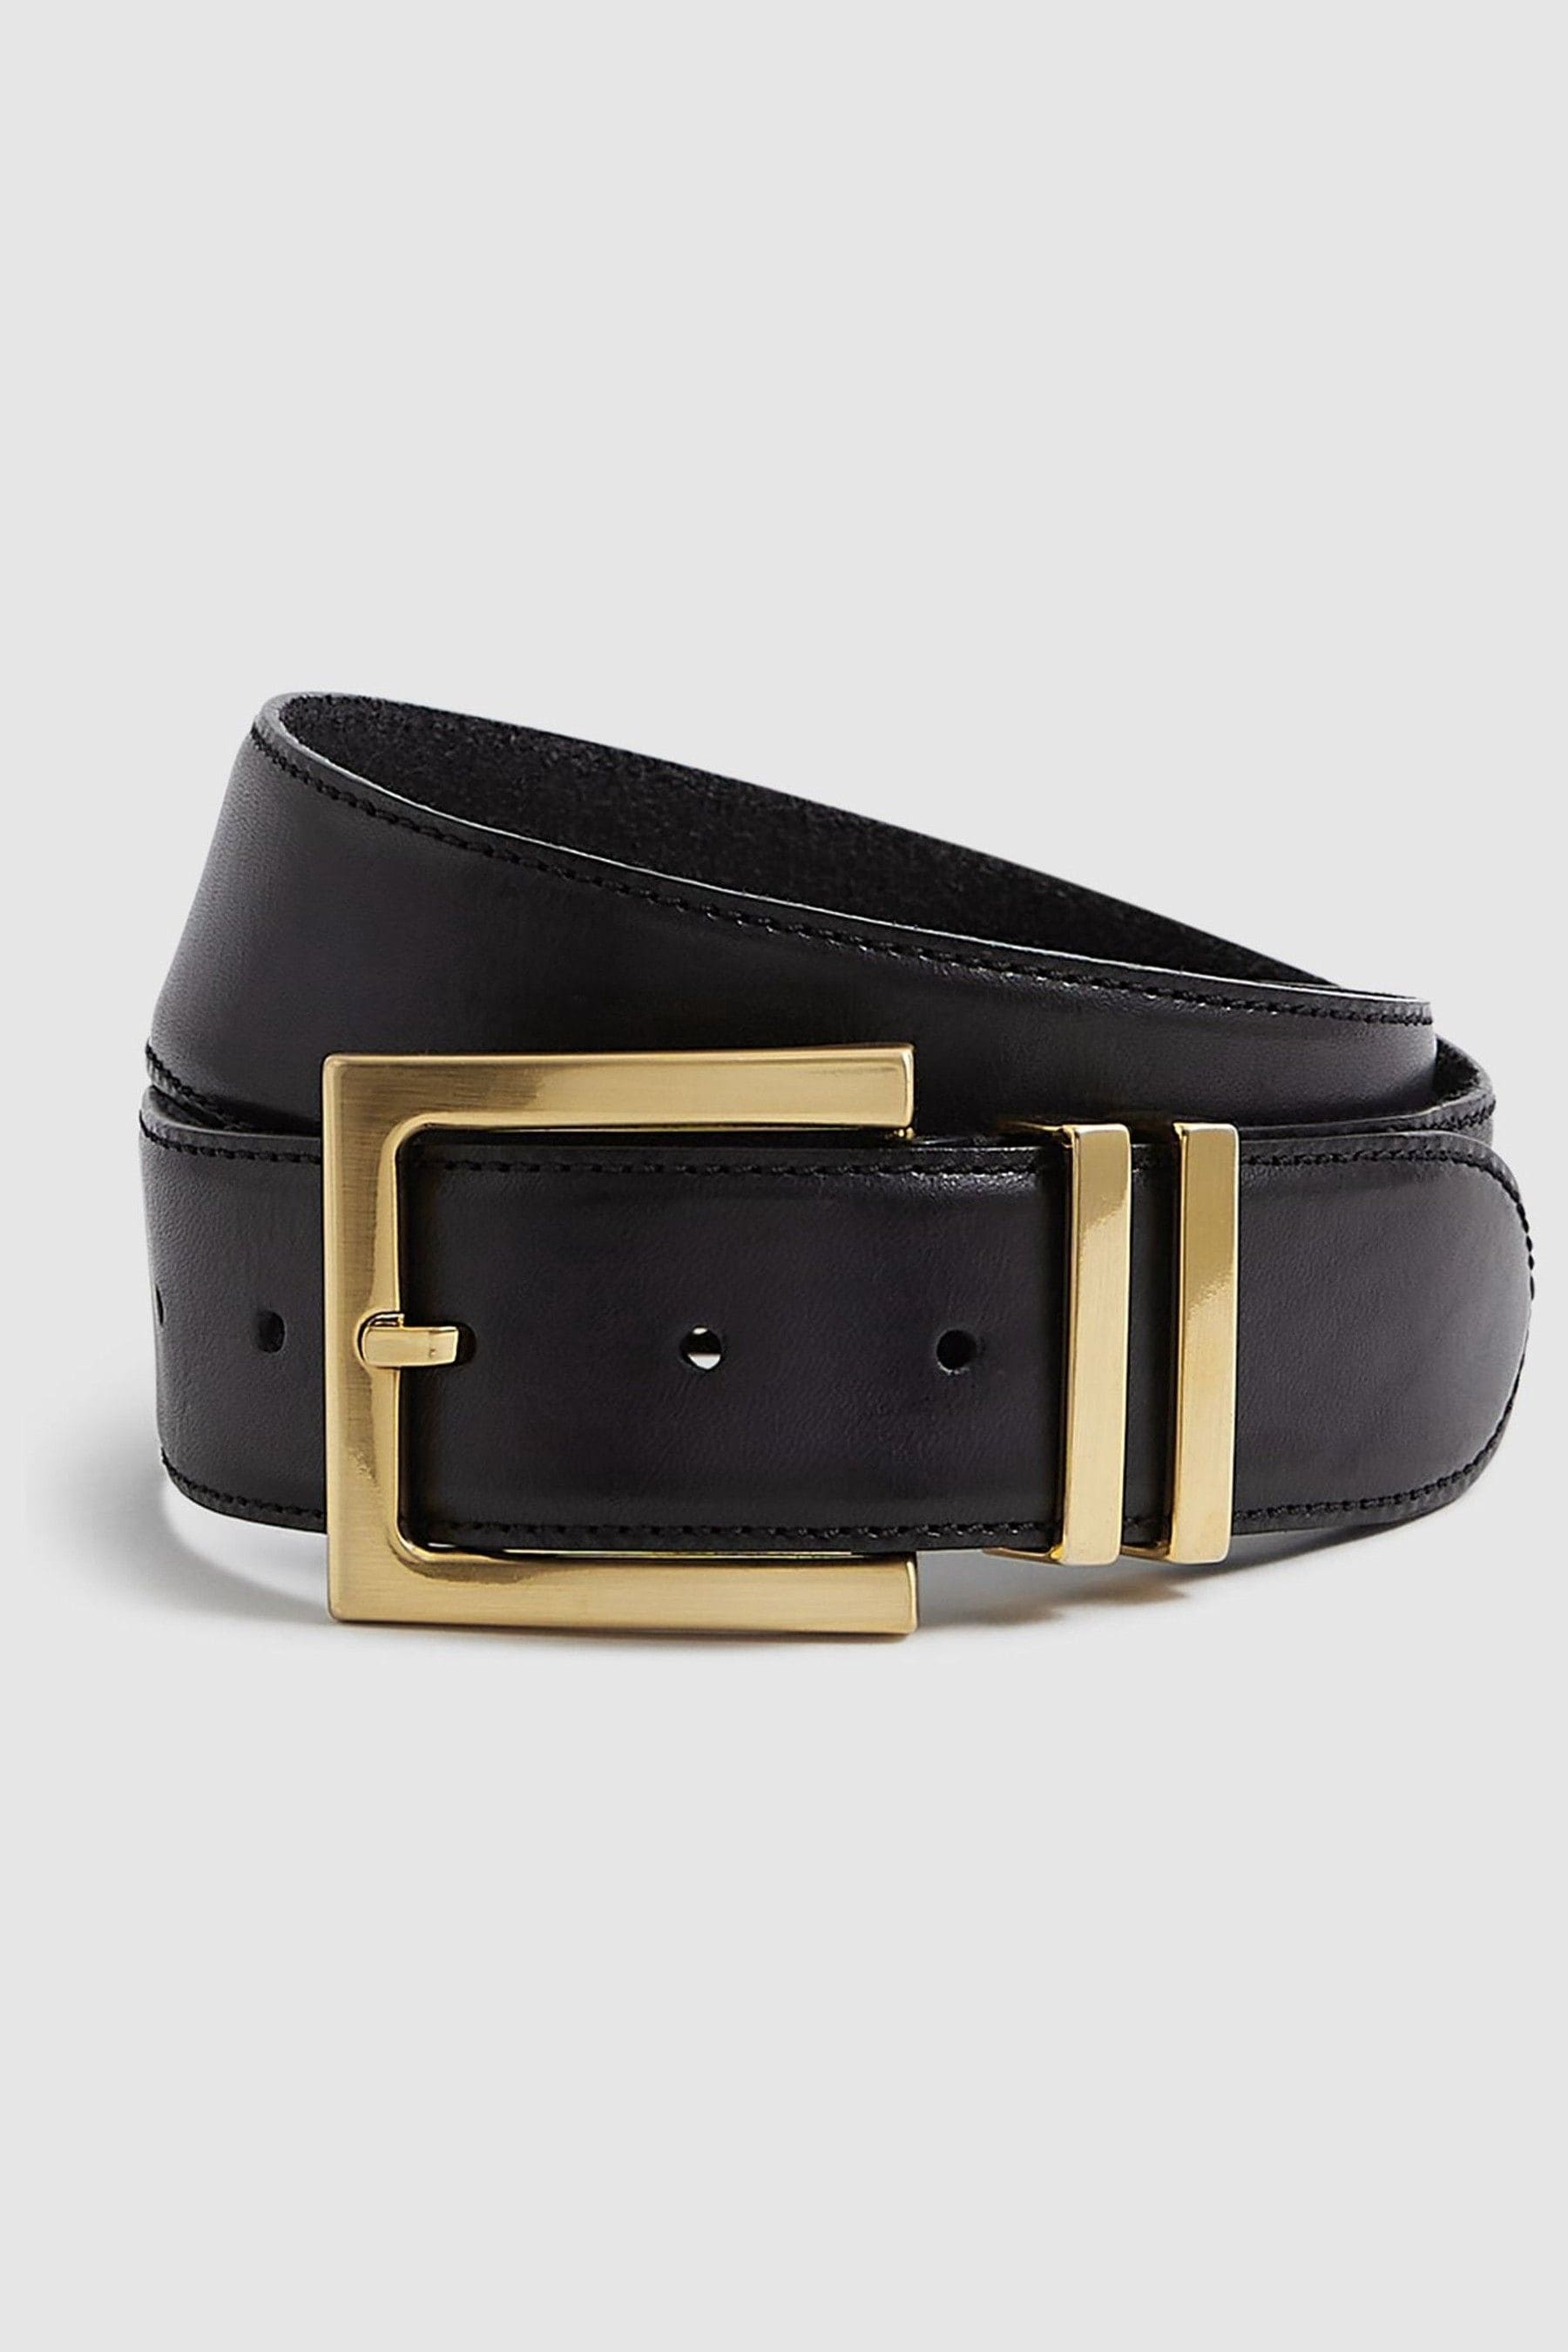 Brompton - Black Leather Belt